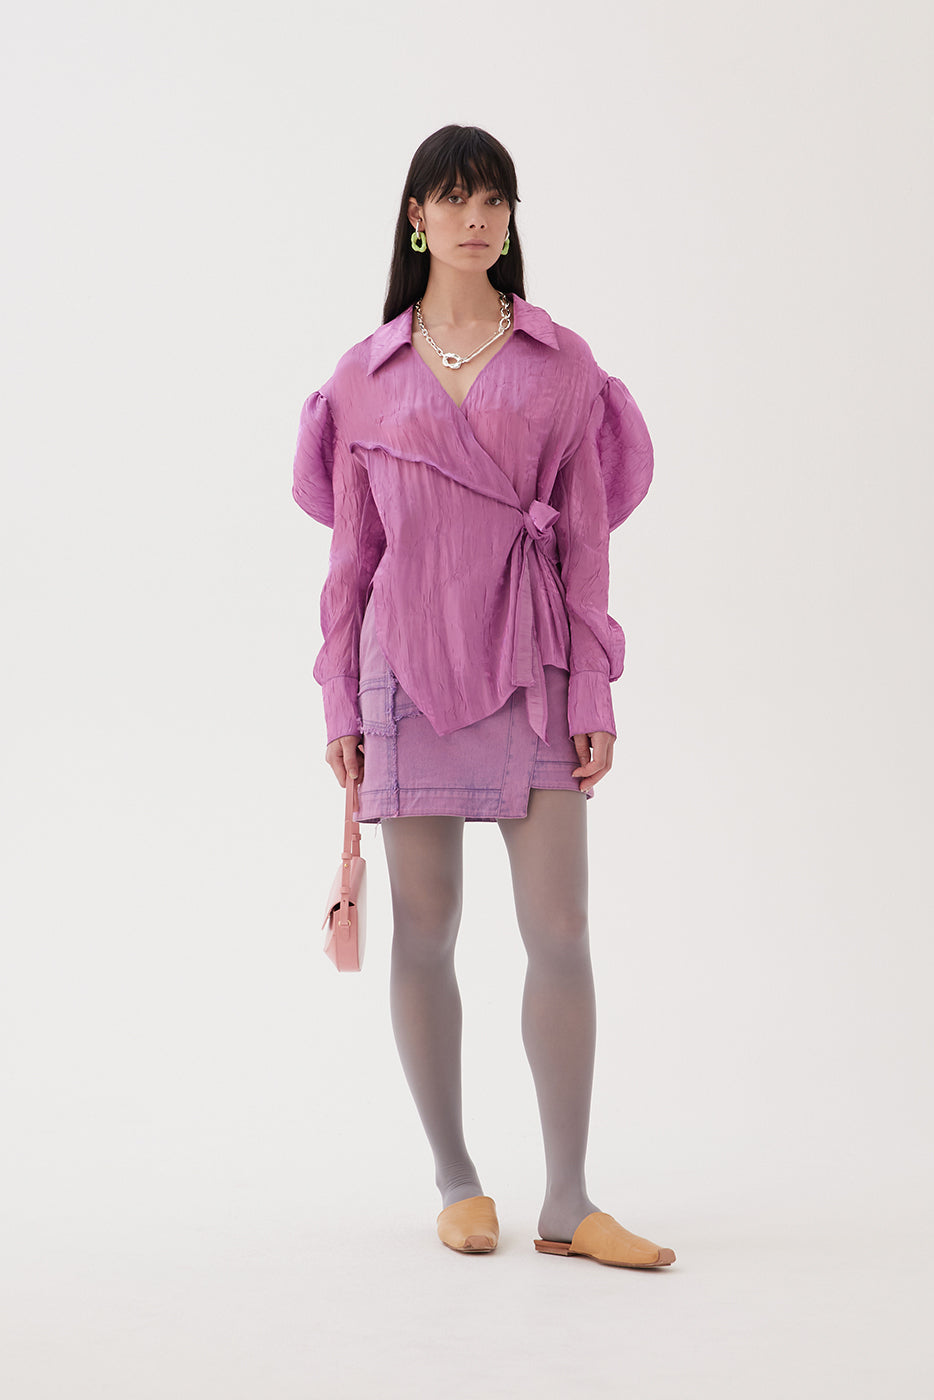 Yuri Shirt in Crinkle Lilac by Rejina Pyo